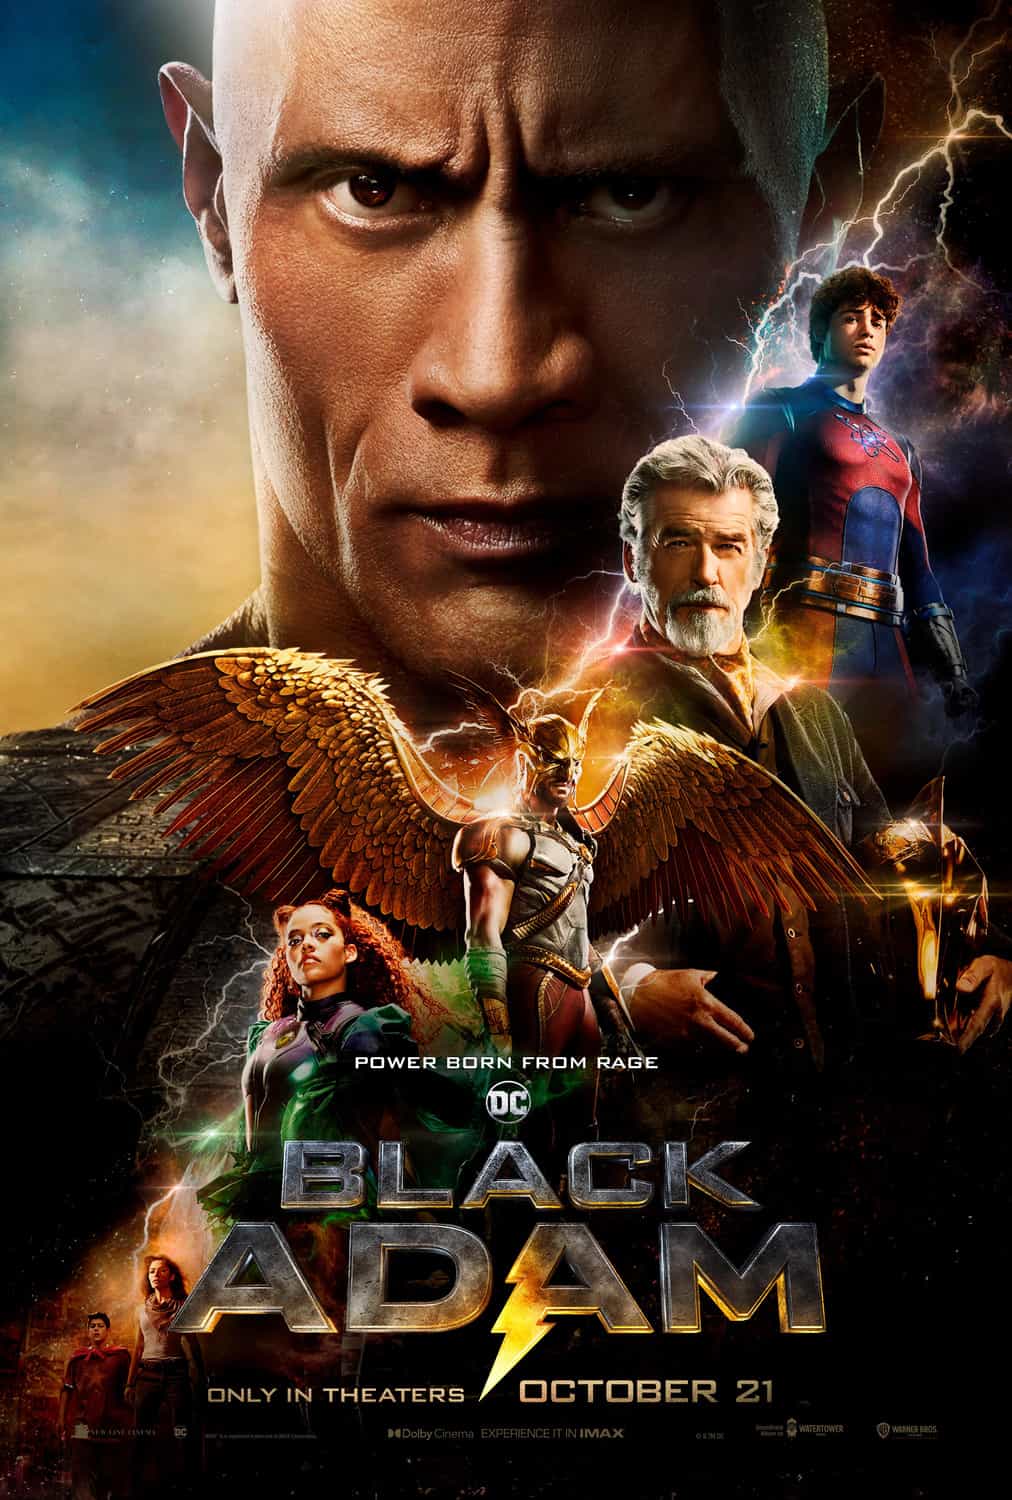 First trailer and poster for Black Adam starring Dwayne Johnson - movie UK release date 21st October 2022 #blackadam